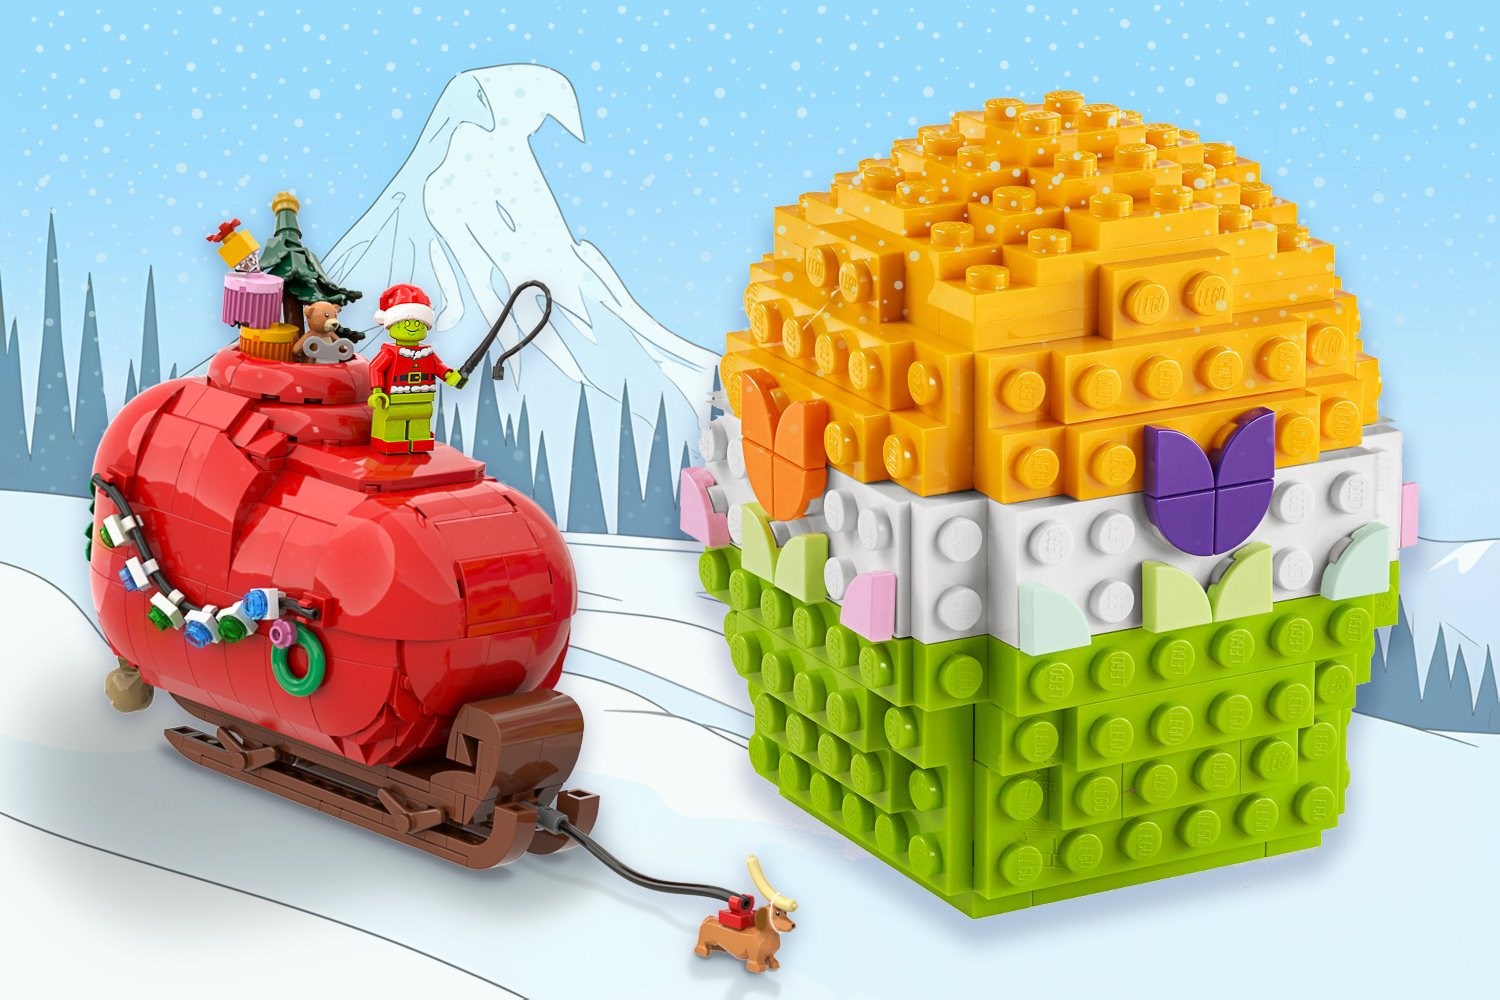 LEGO IDEAS - Build that holiday into THAT holiday! - Japan Sakura Season